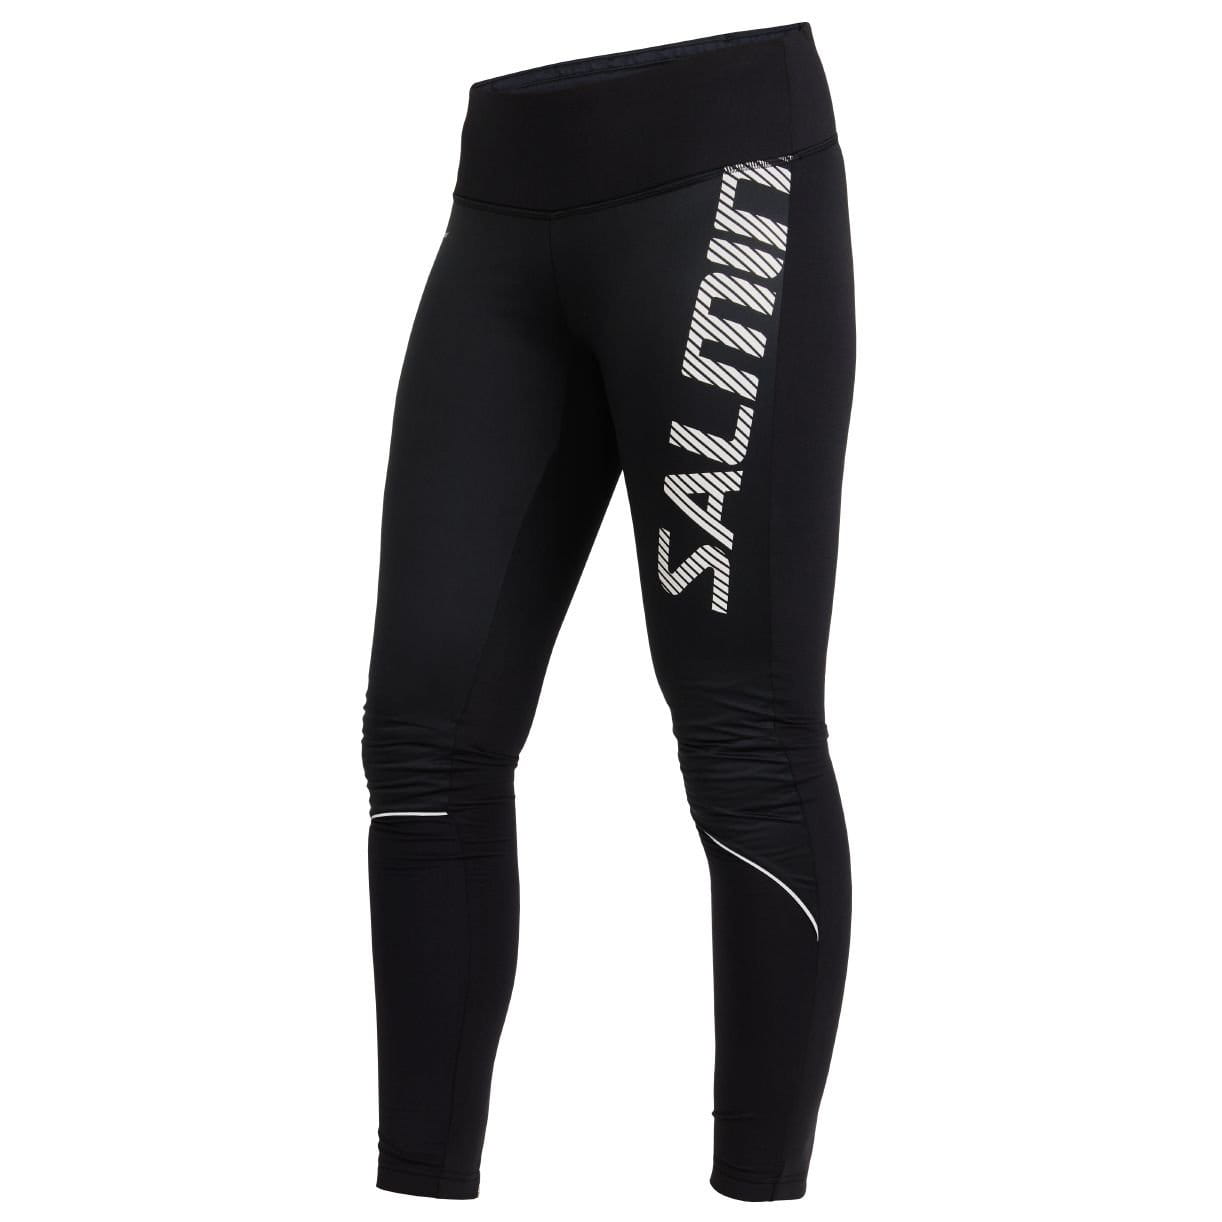 Pantalones cortos de mujer para correr Salming Thermal Wind Tights Women Black